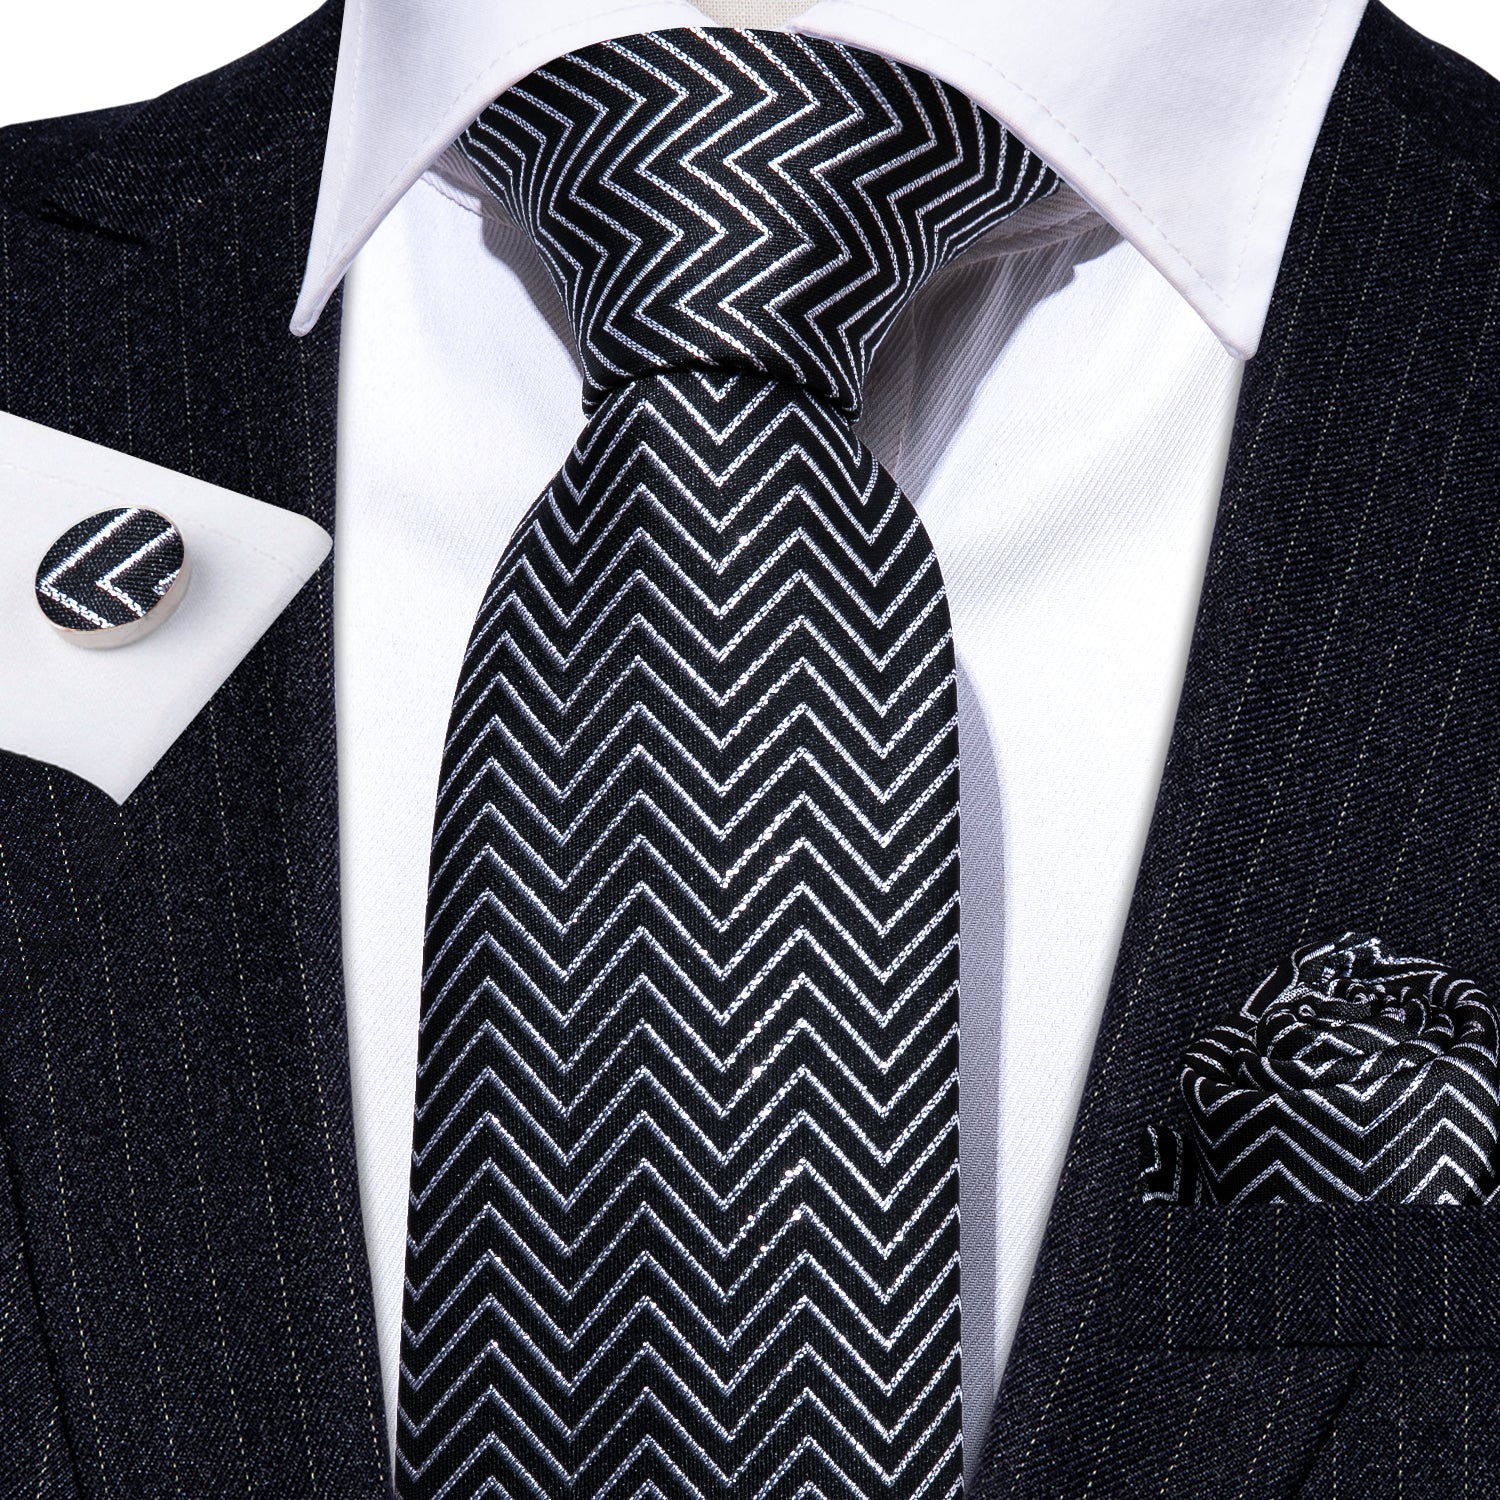 Barry.Wang New Black White Striped Tie Handkerchief Cufflinks Set